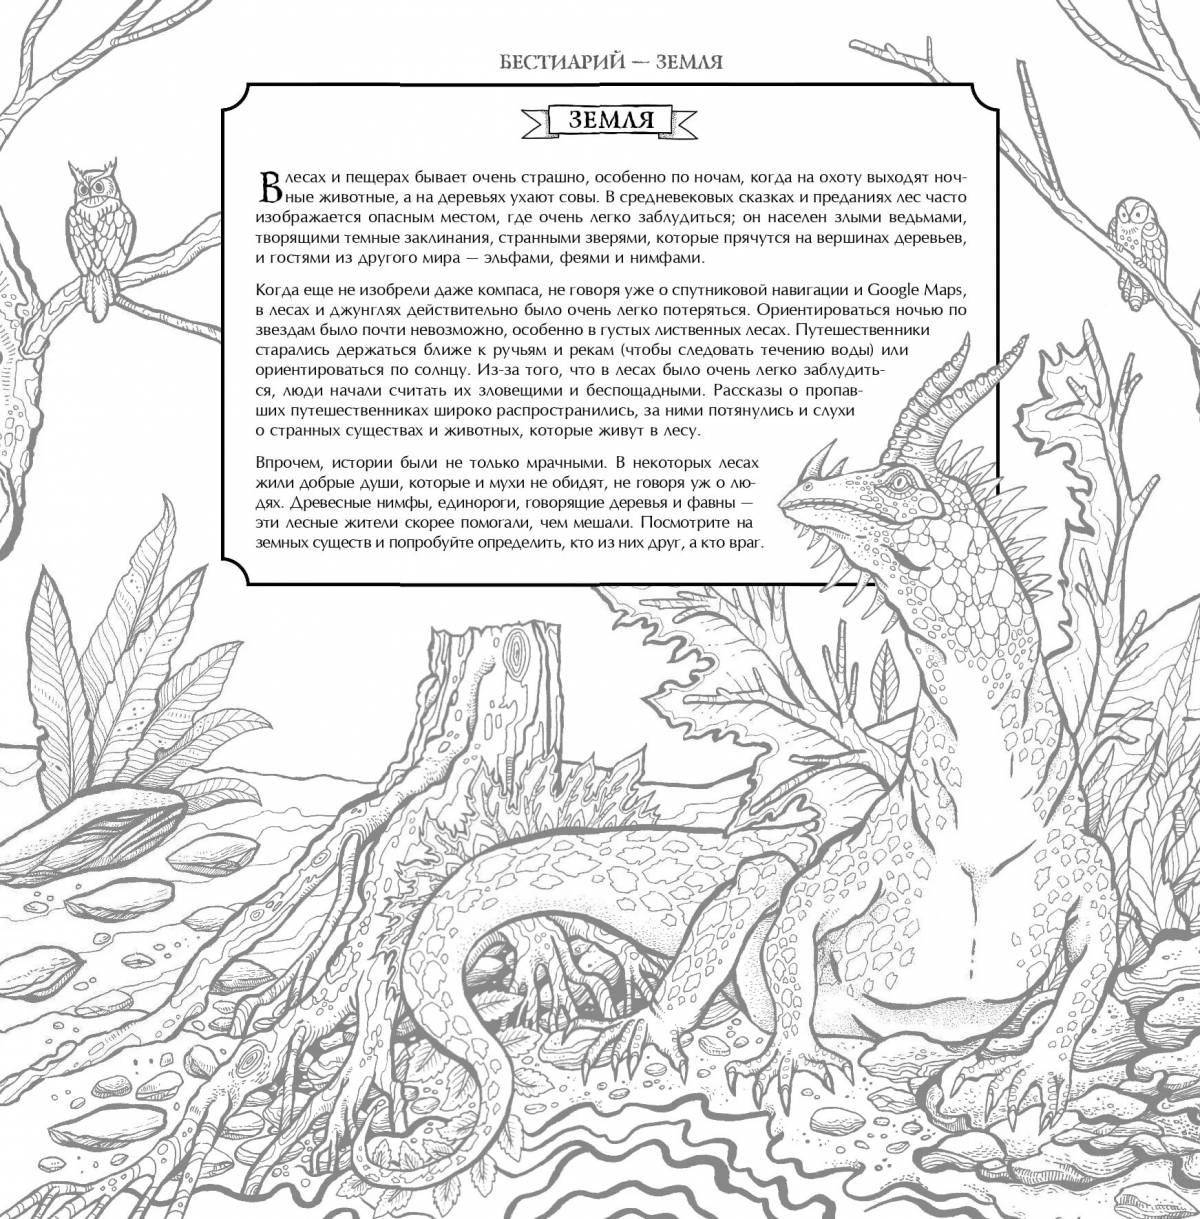 Extraordinary coloring book with fantasy creatures